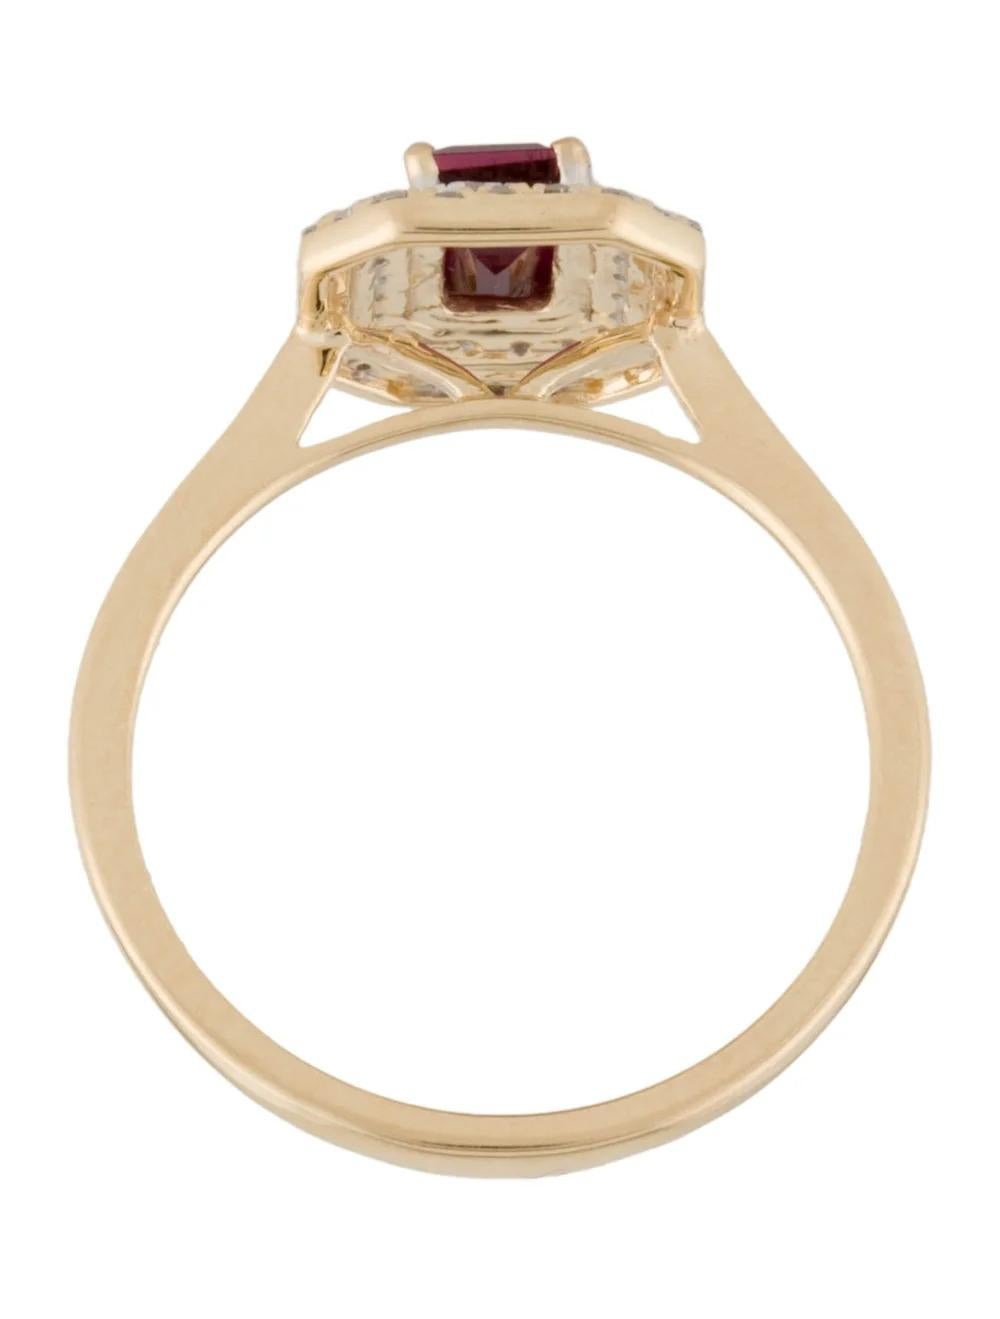 Women's 14K Tourmaline & Diamond Cocktail Ring, Size 6.25 - Stunning Statement Piece For Sale